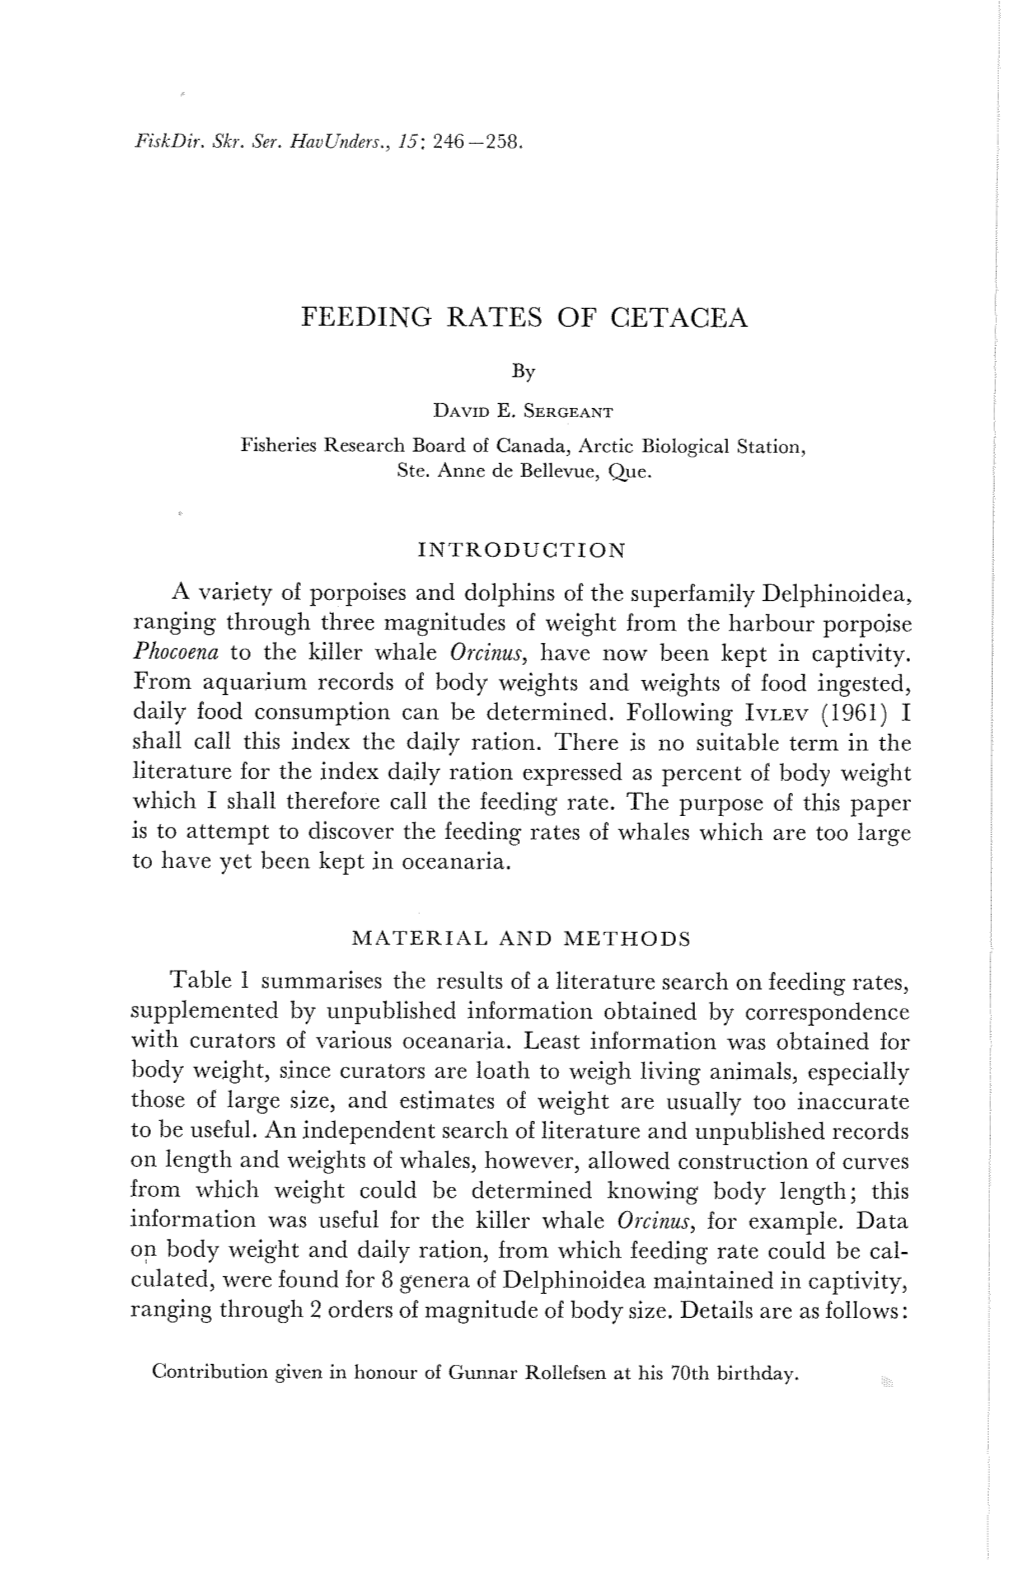 Feeding Rates of Cetacea